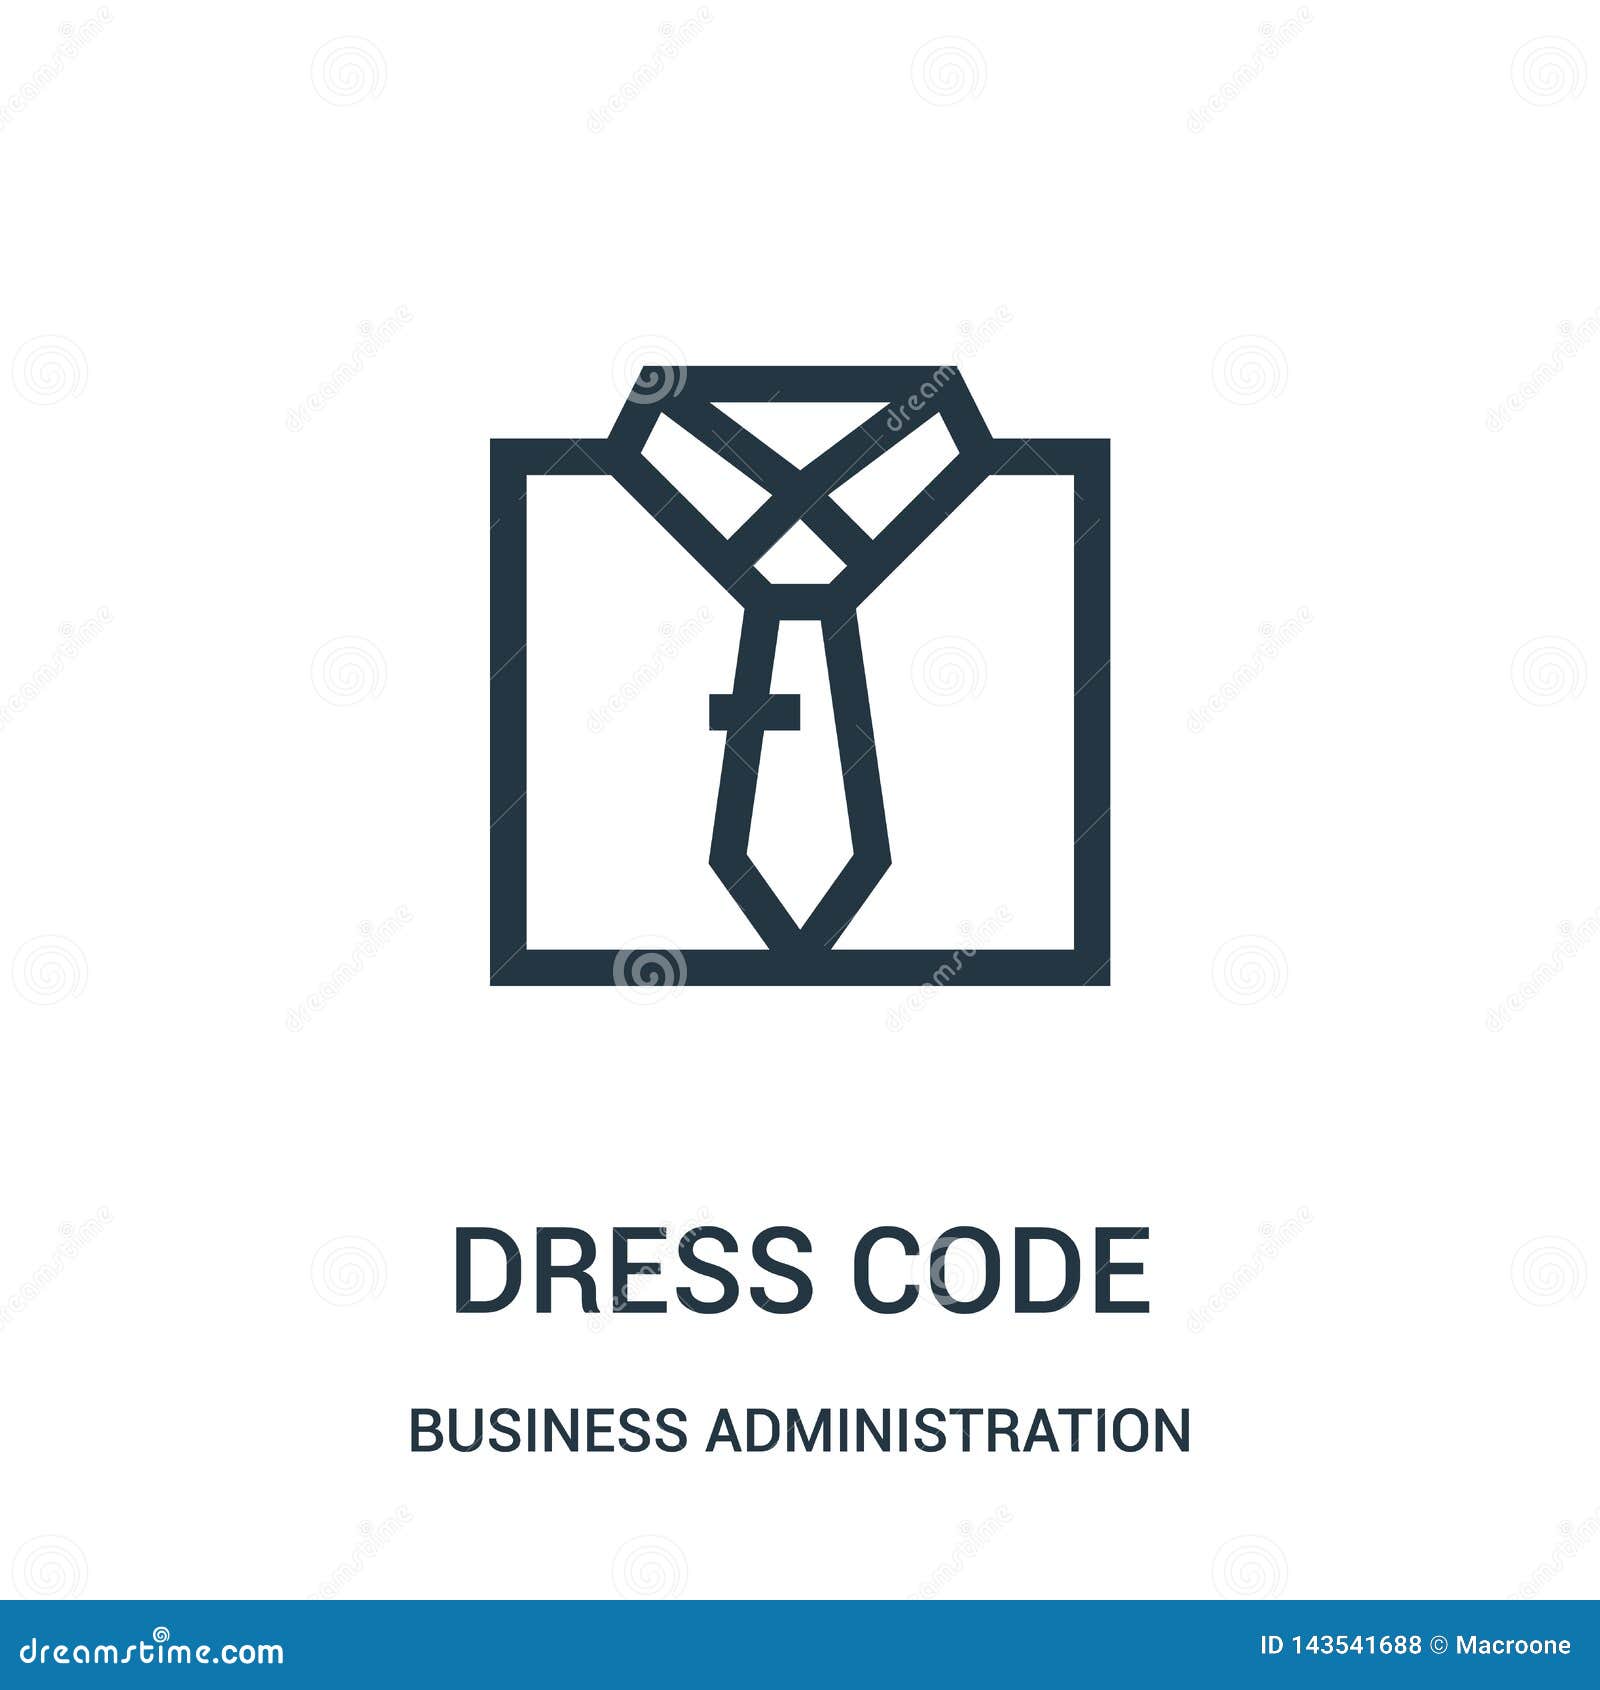 vector dress code logo